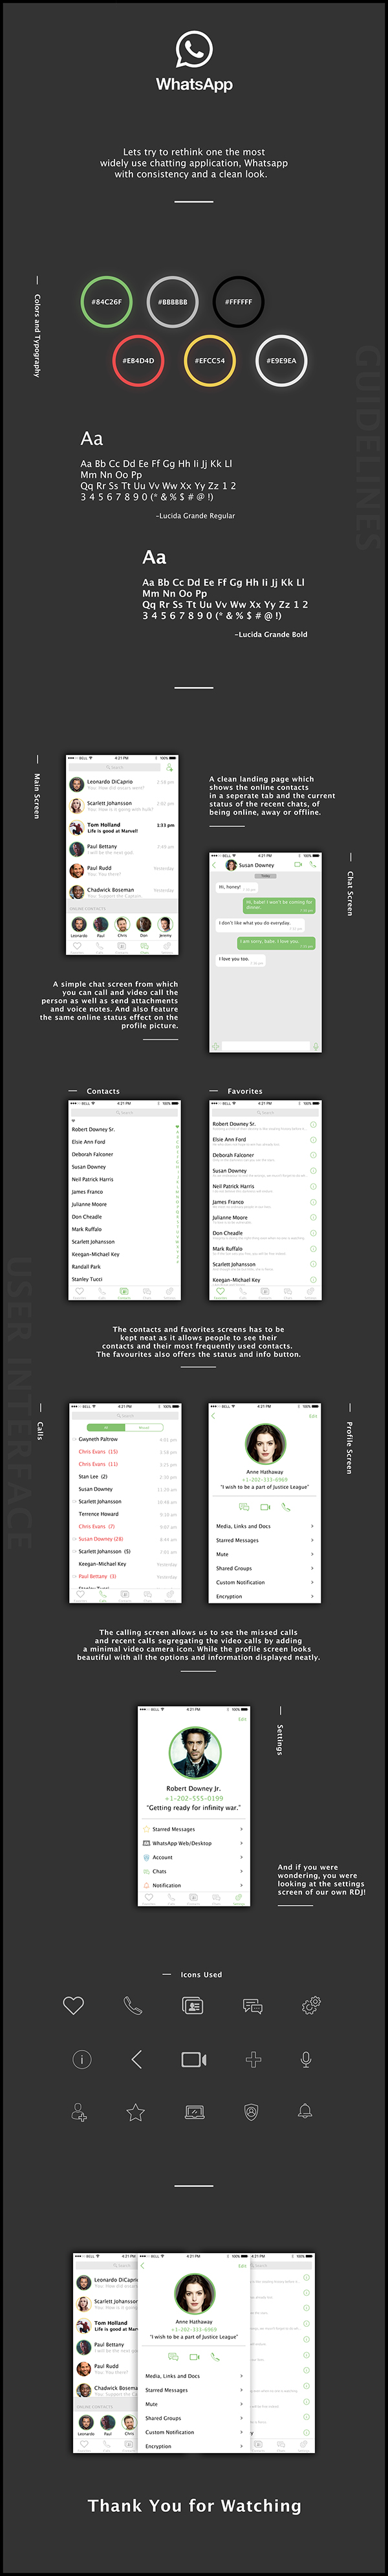 WhatsApp Redesigned 
Concept UI